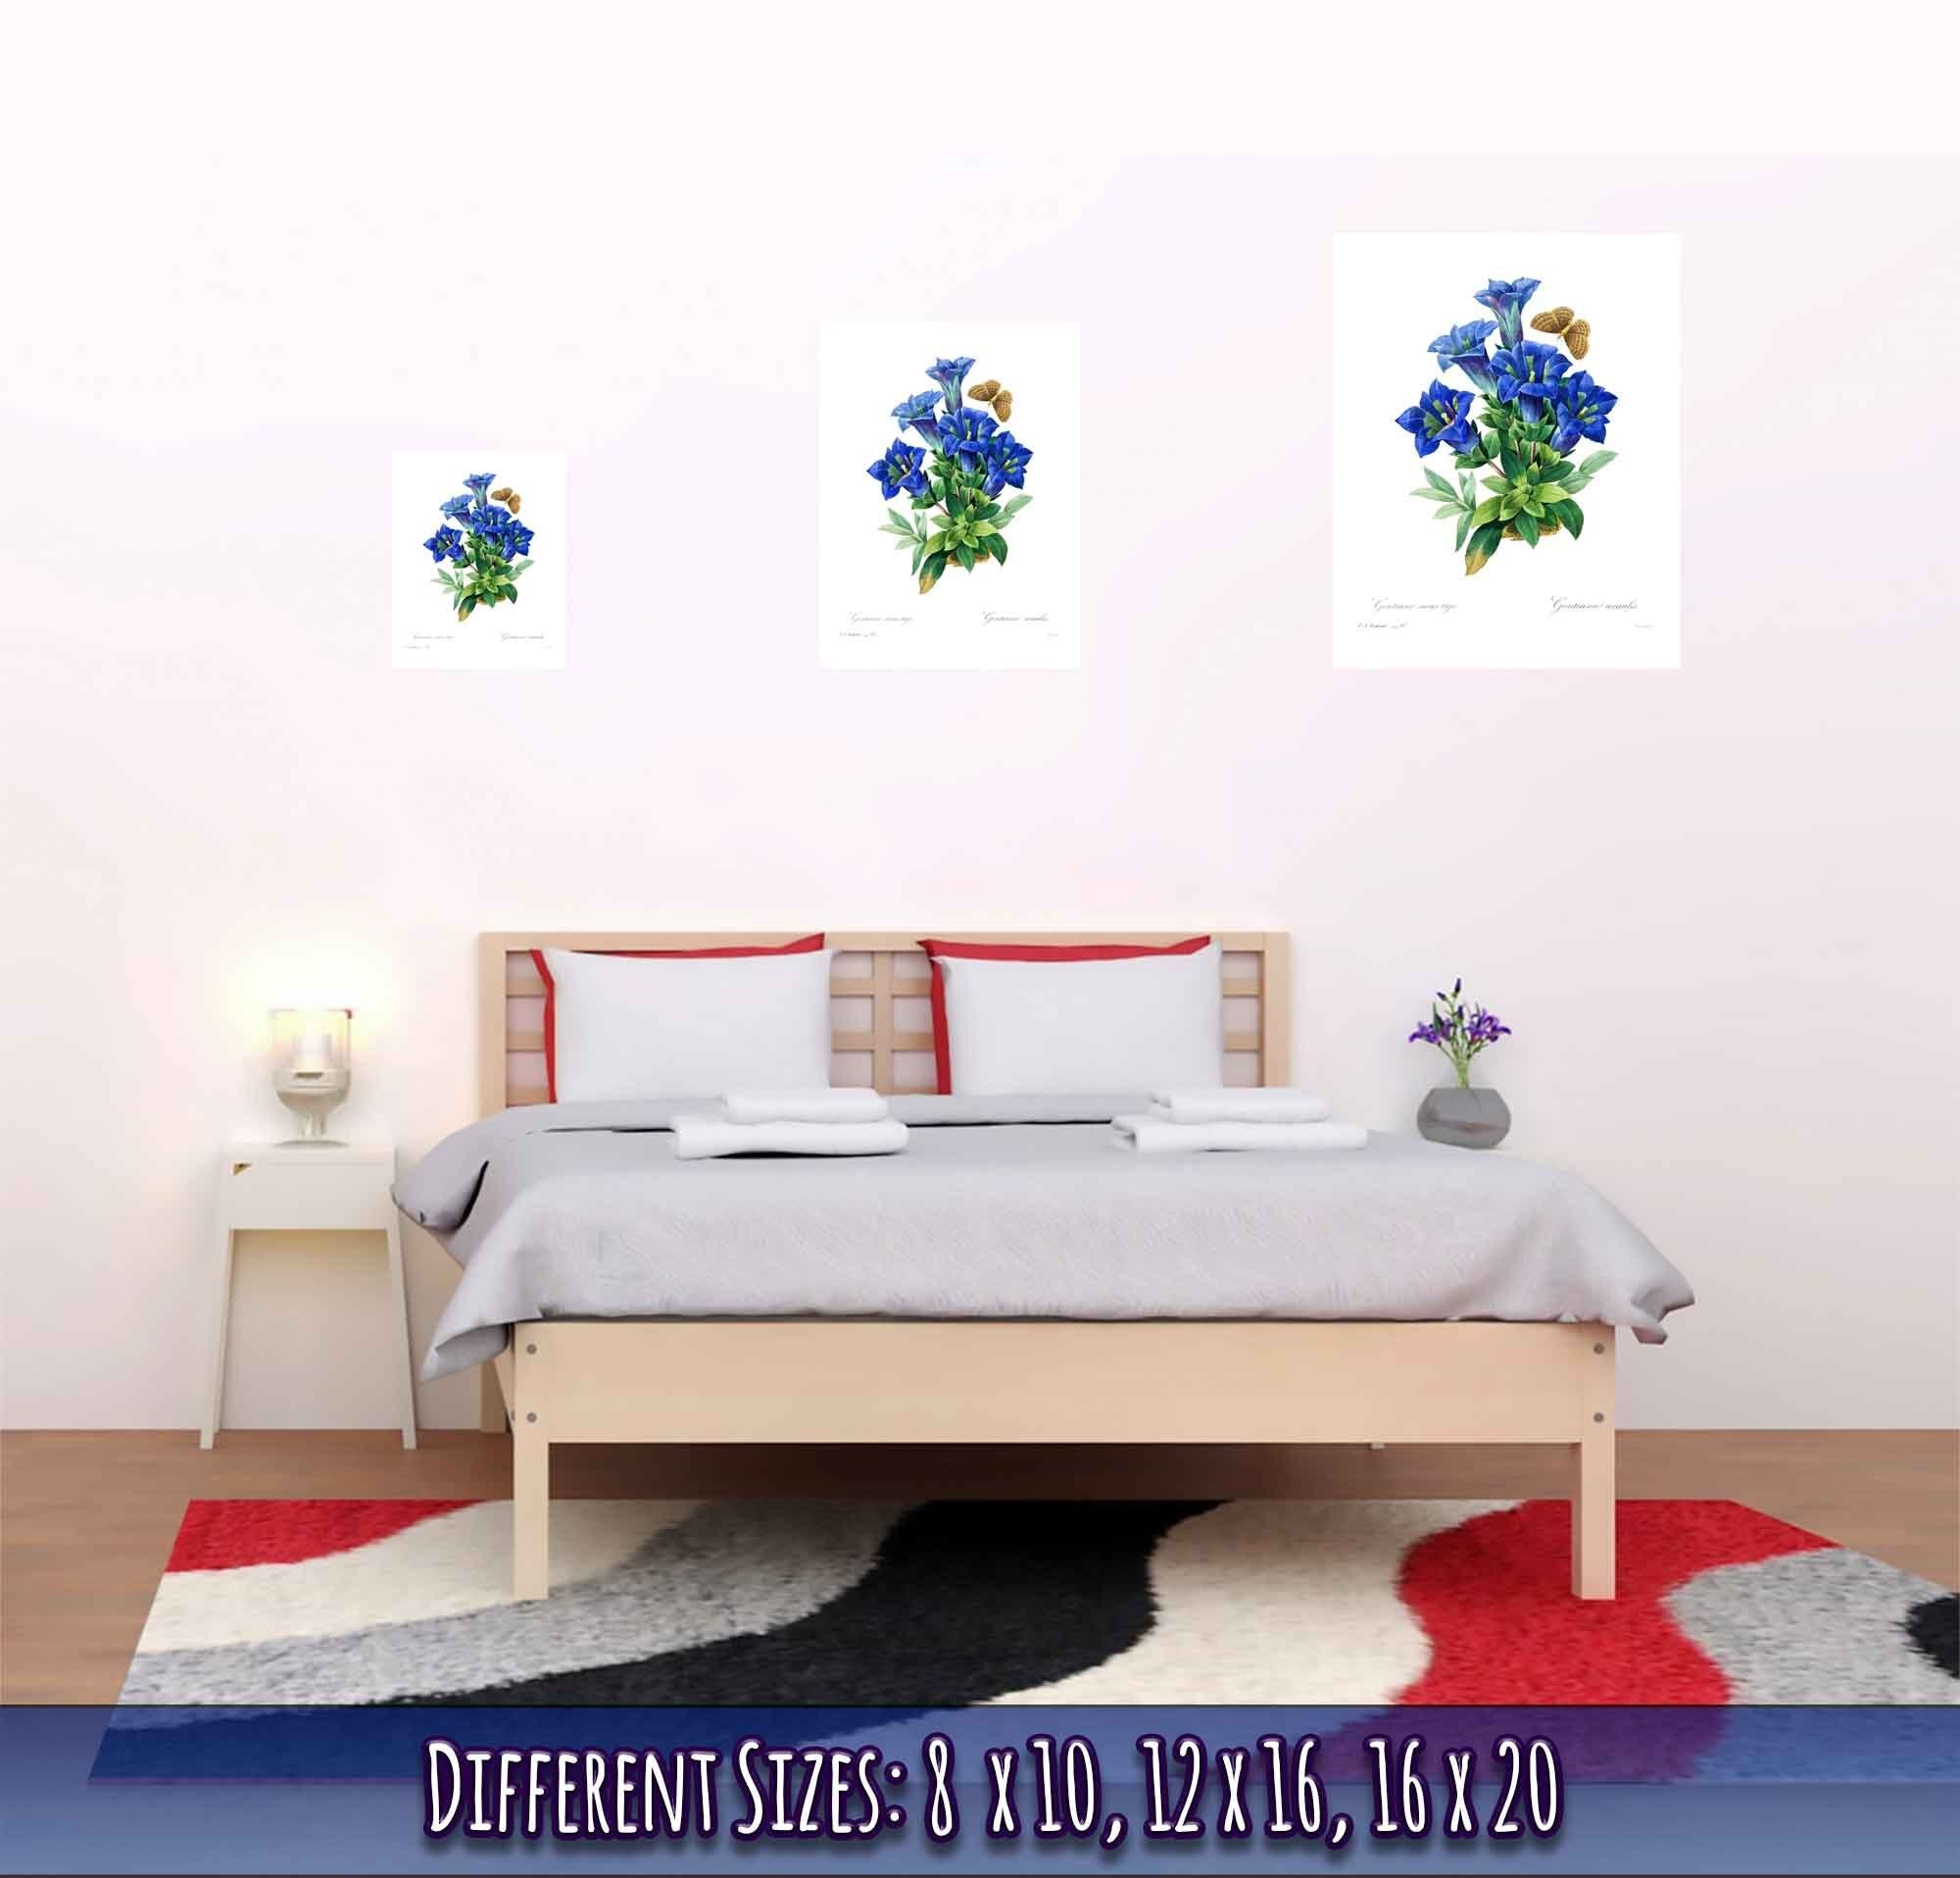 Vintage Gentiana Blue Flower Poster - Botanical Blue Flower Print - Pierre Joseph Redoute - WallArtPrints4U